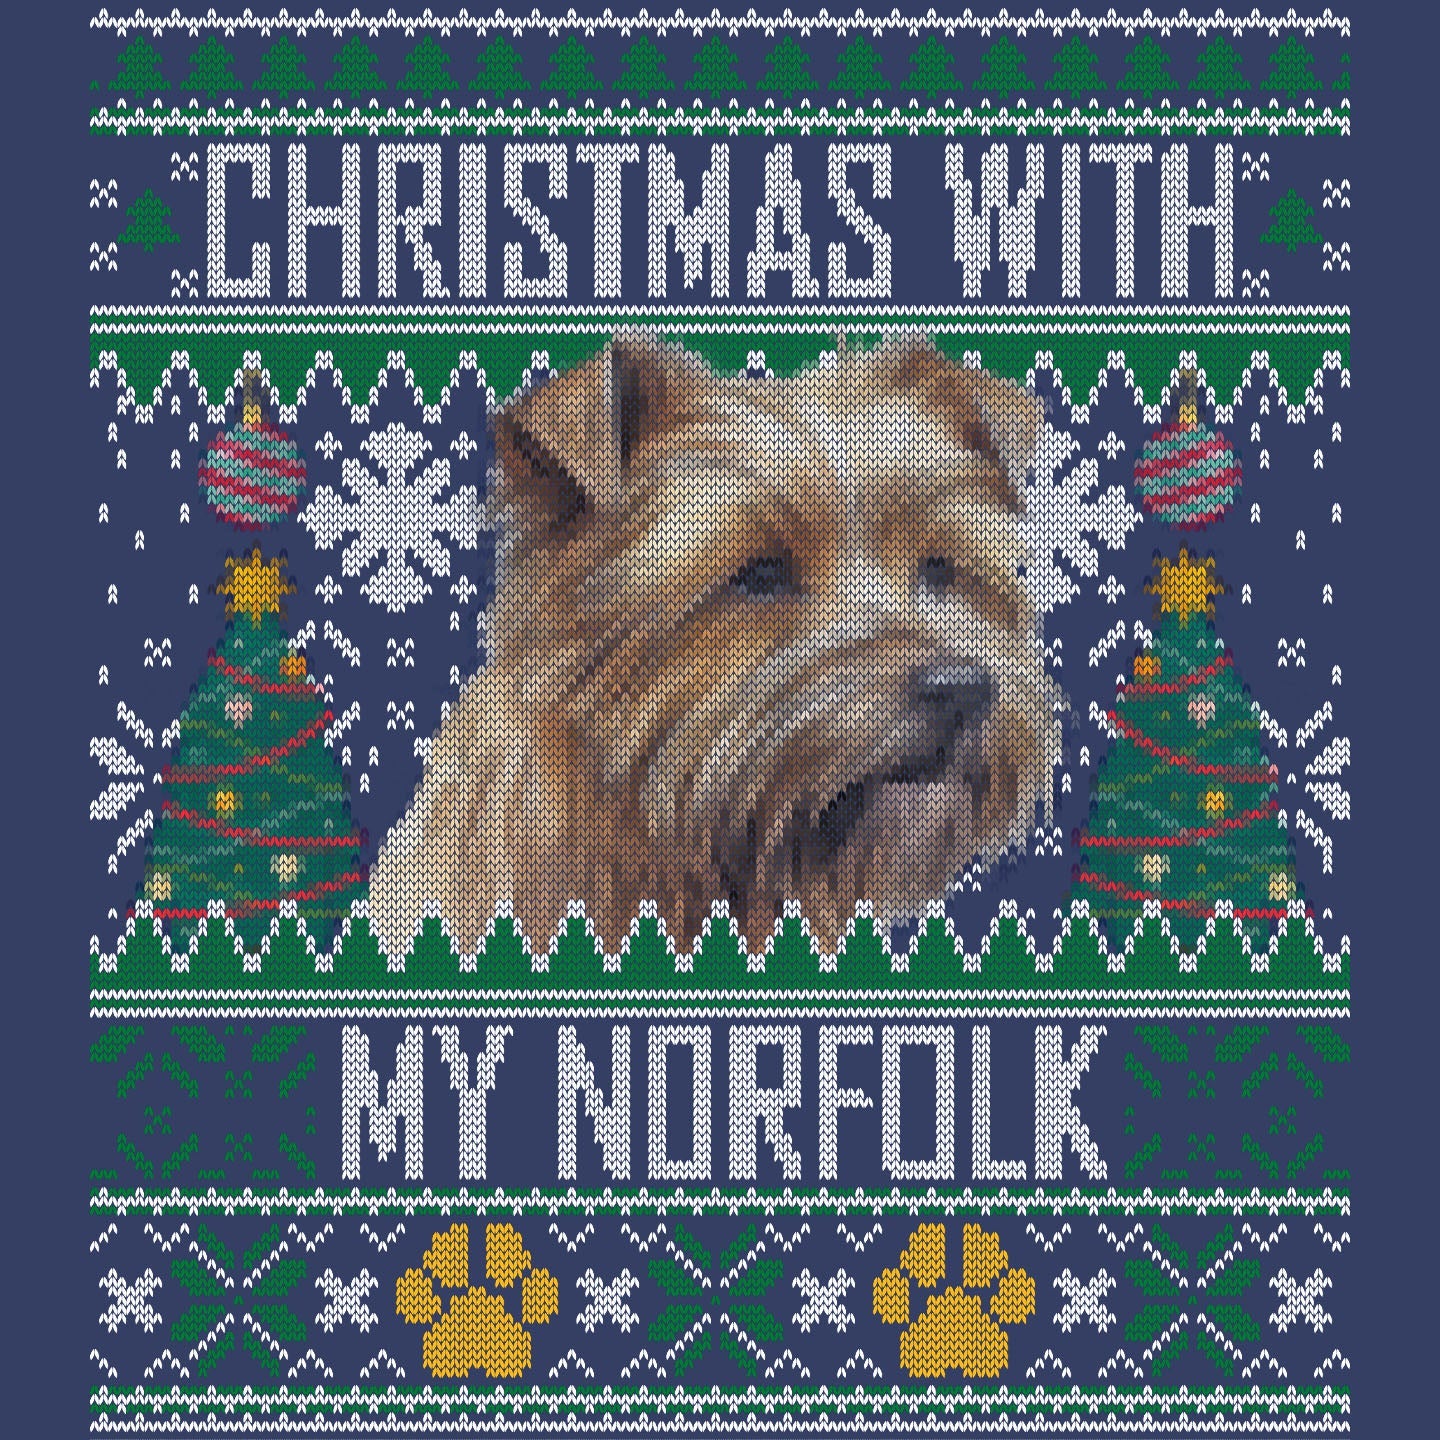 Ugly Sweater Christmas with My Norfolk Terrier - Adult Unisex Crewneck Sweatshirt